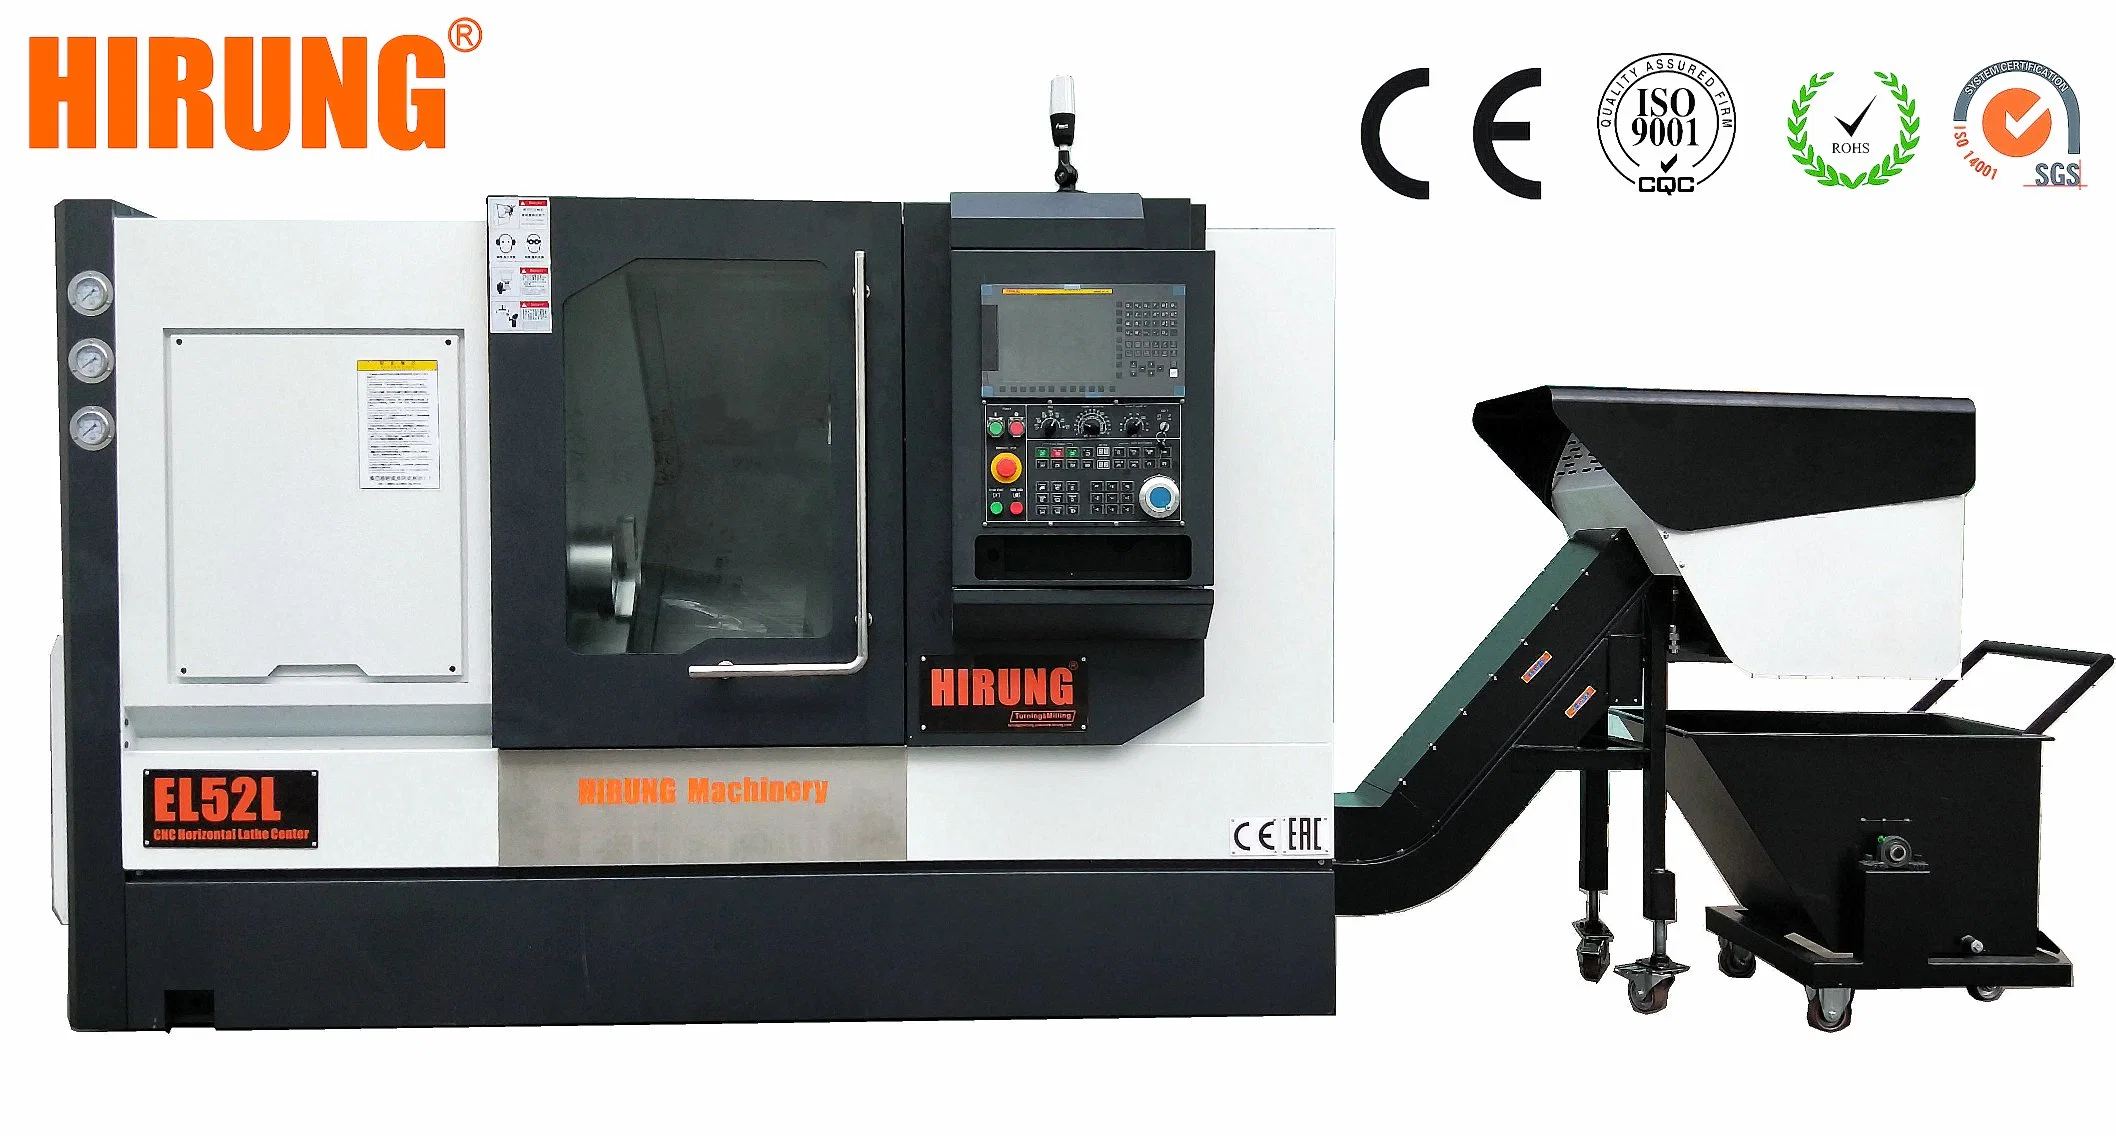 Machine Tool, Turret Tool CNC, CNC Machine Tools, Turret Tools, Hydraulic Tools Turret EL52L